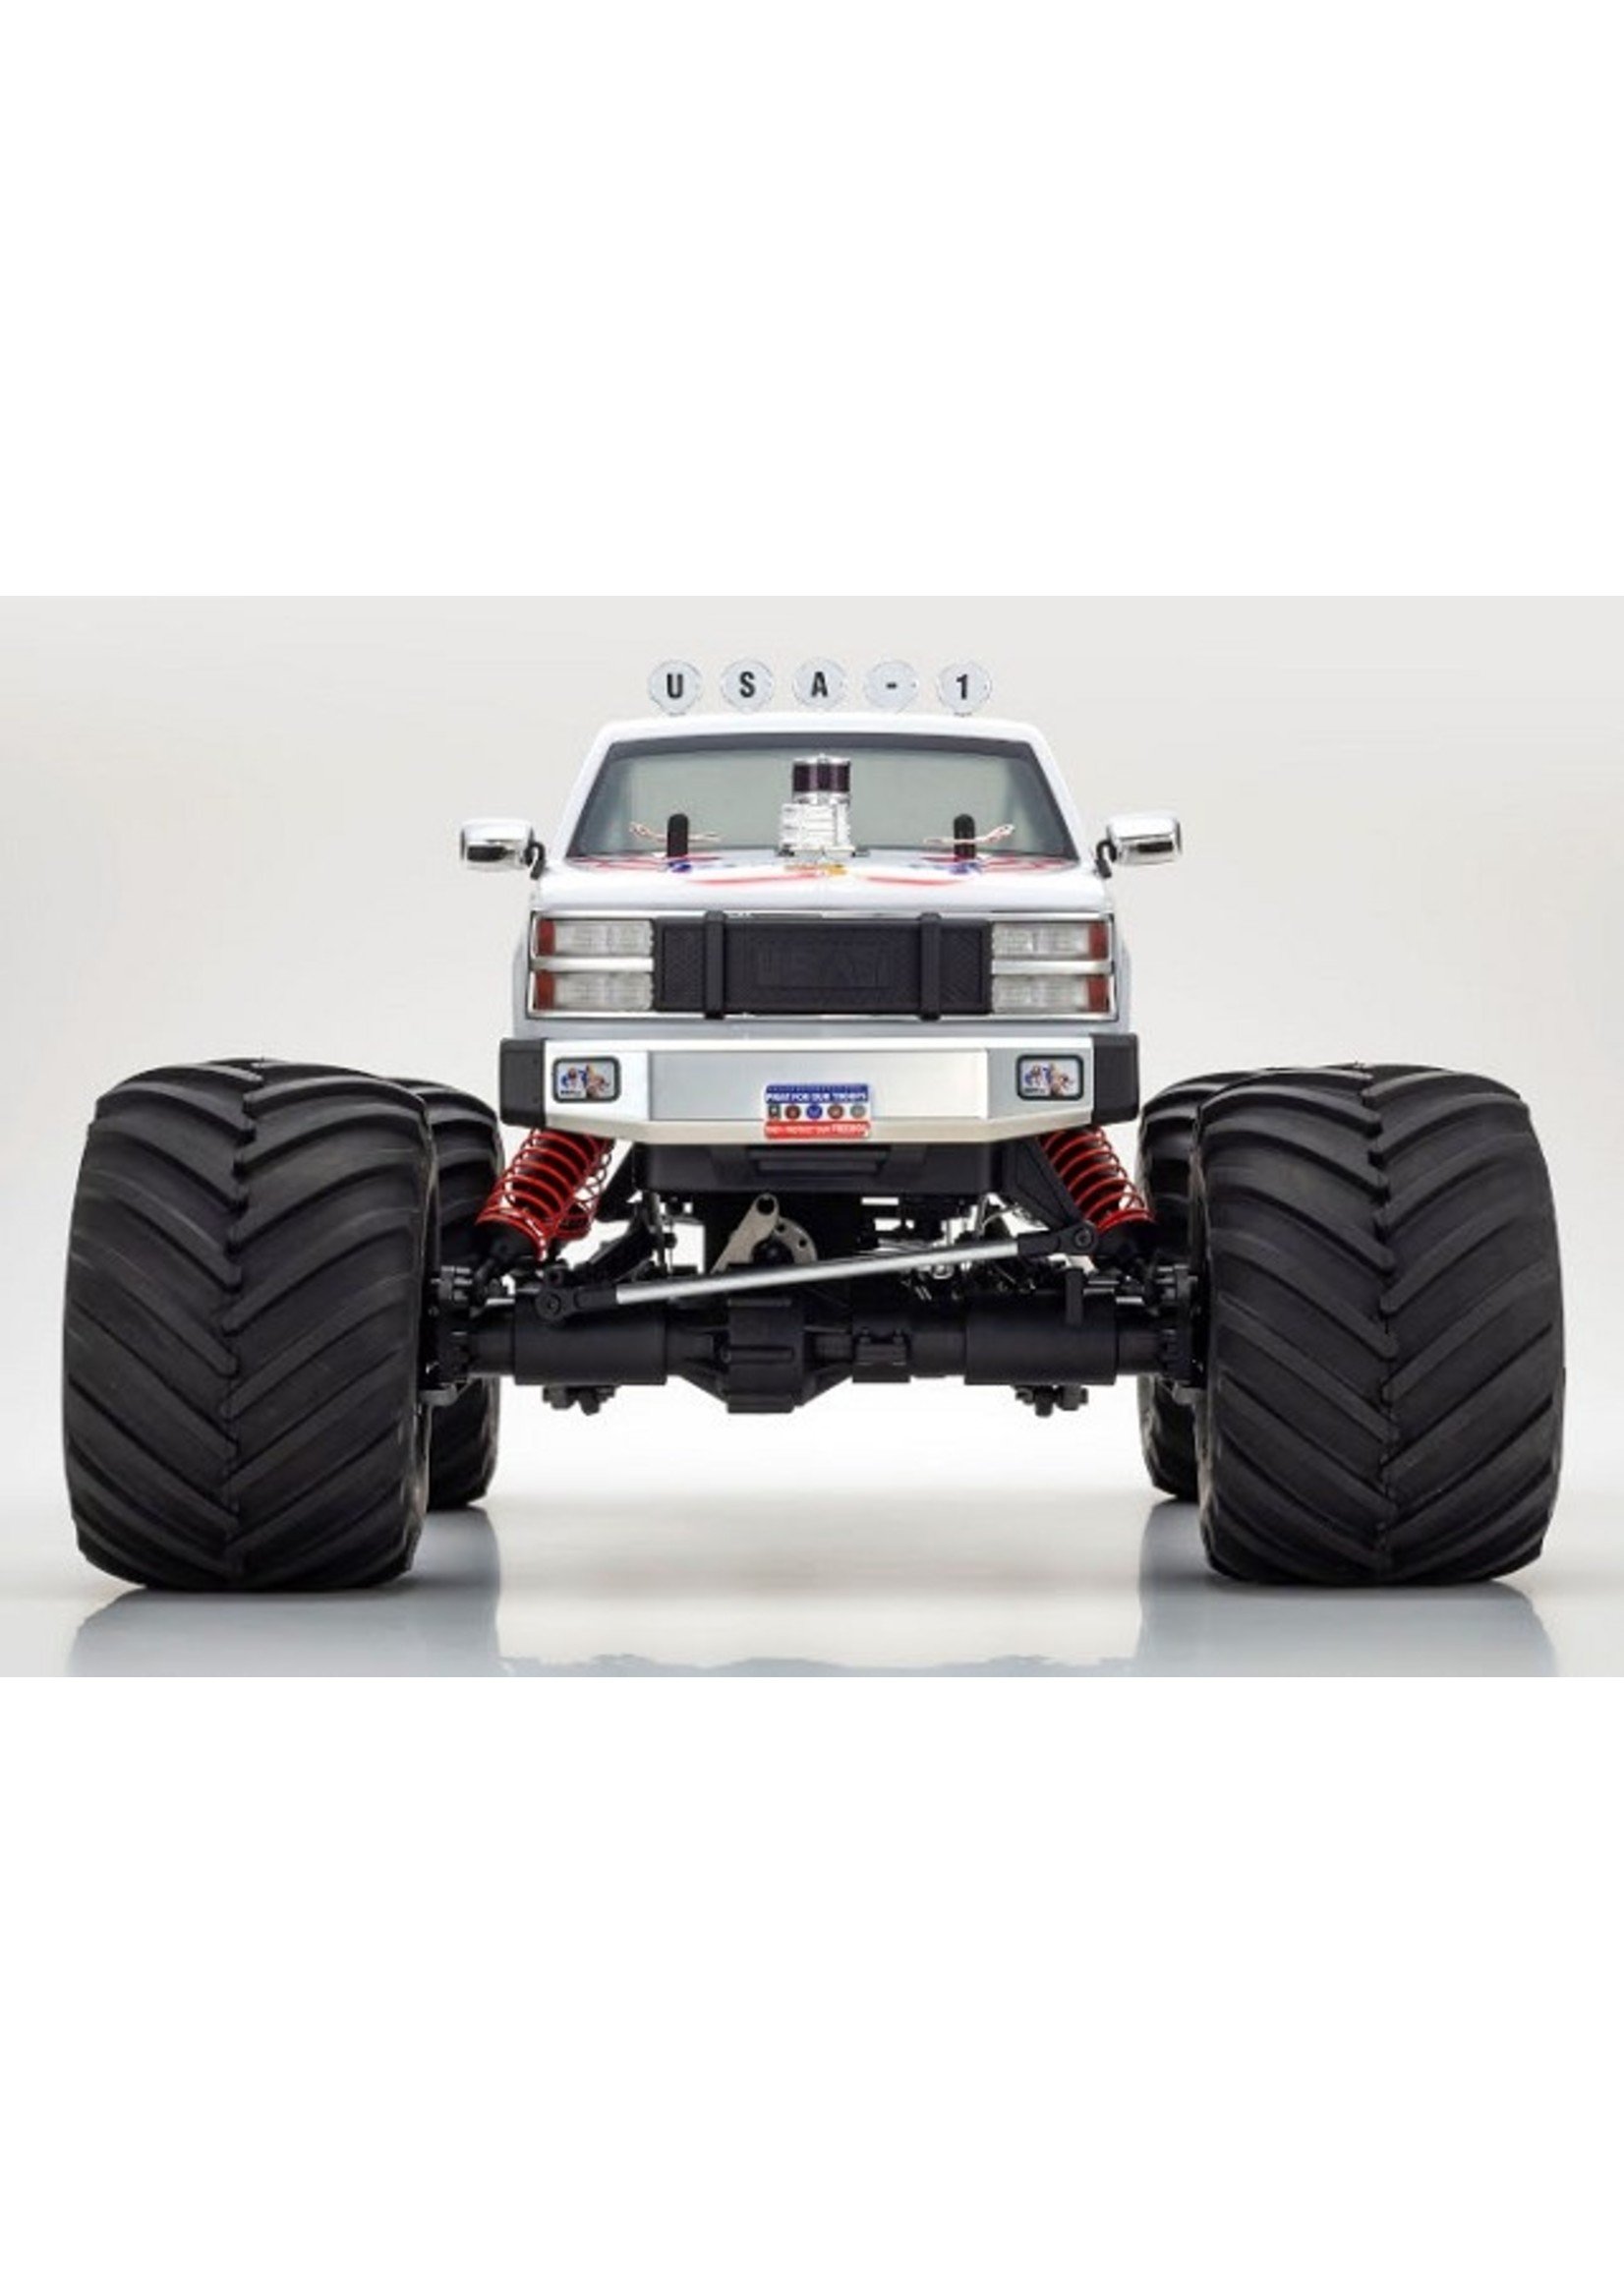 Kyosho 1/8 USA-1 GP .25 Engine Monster Truck - Readyset